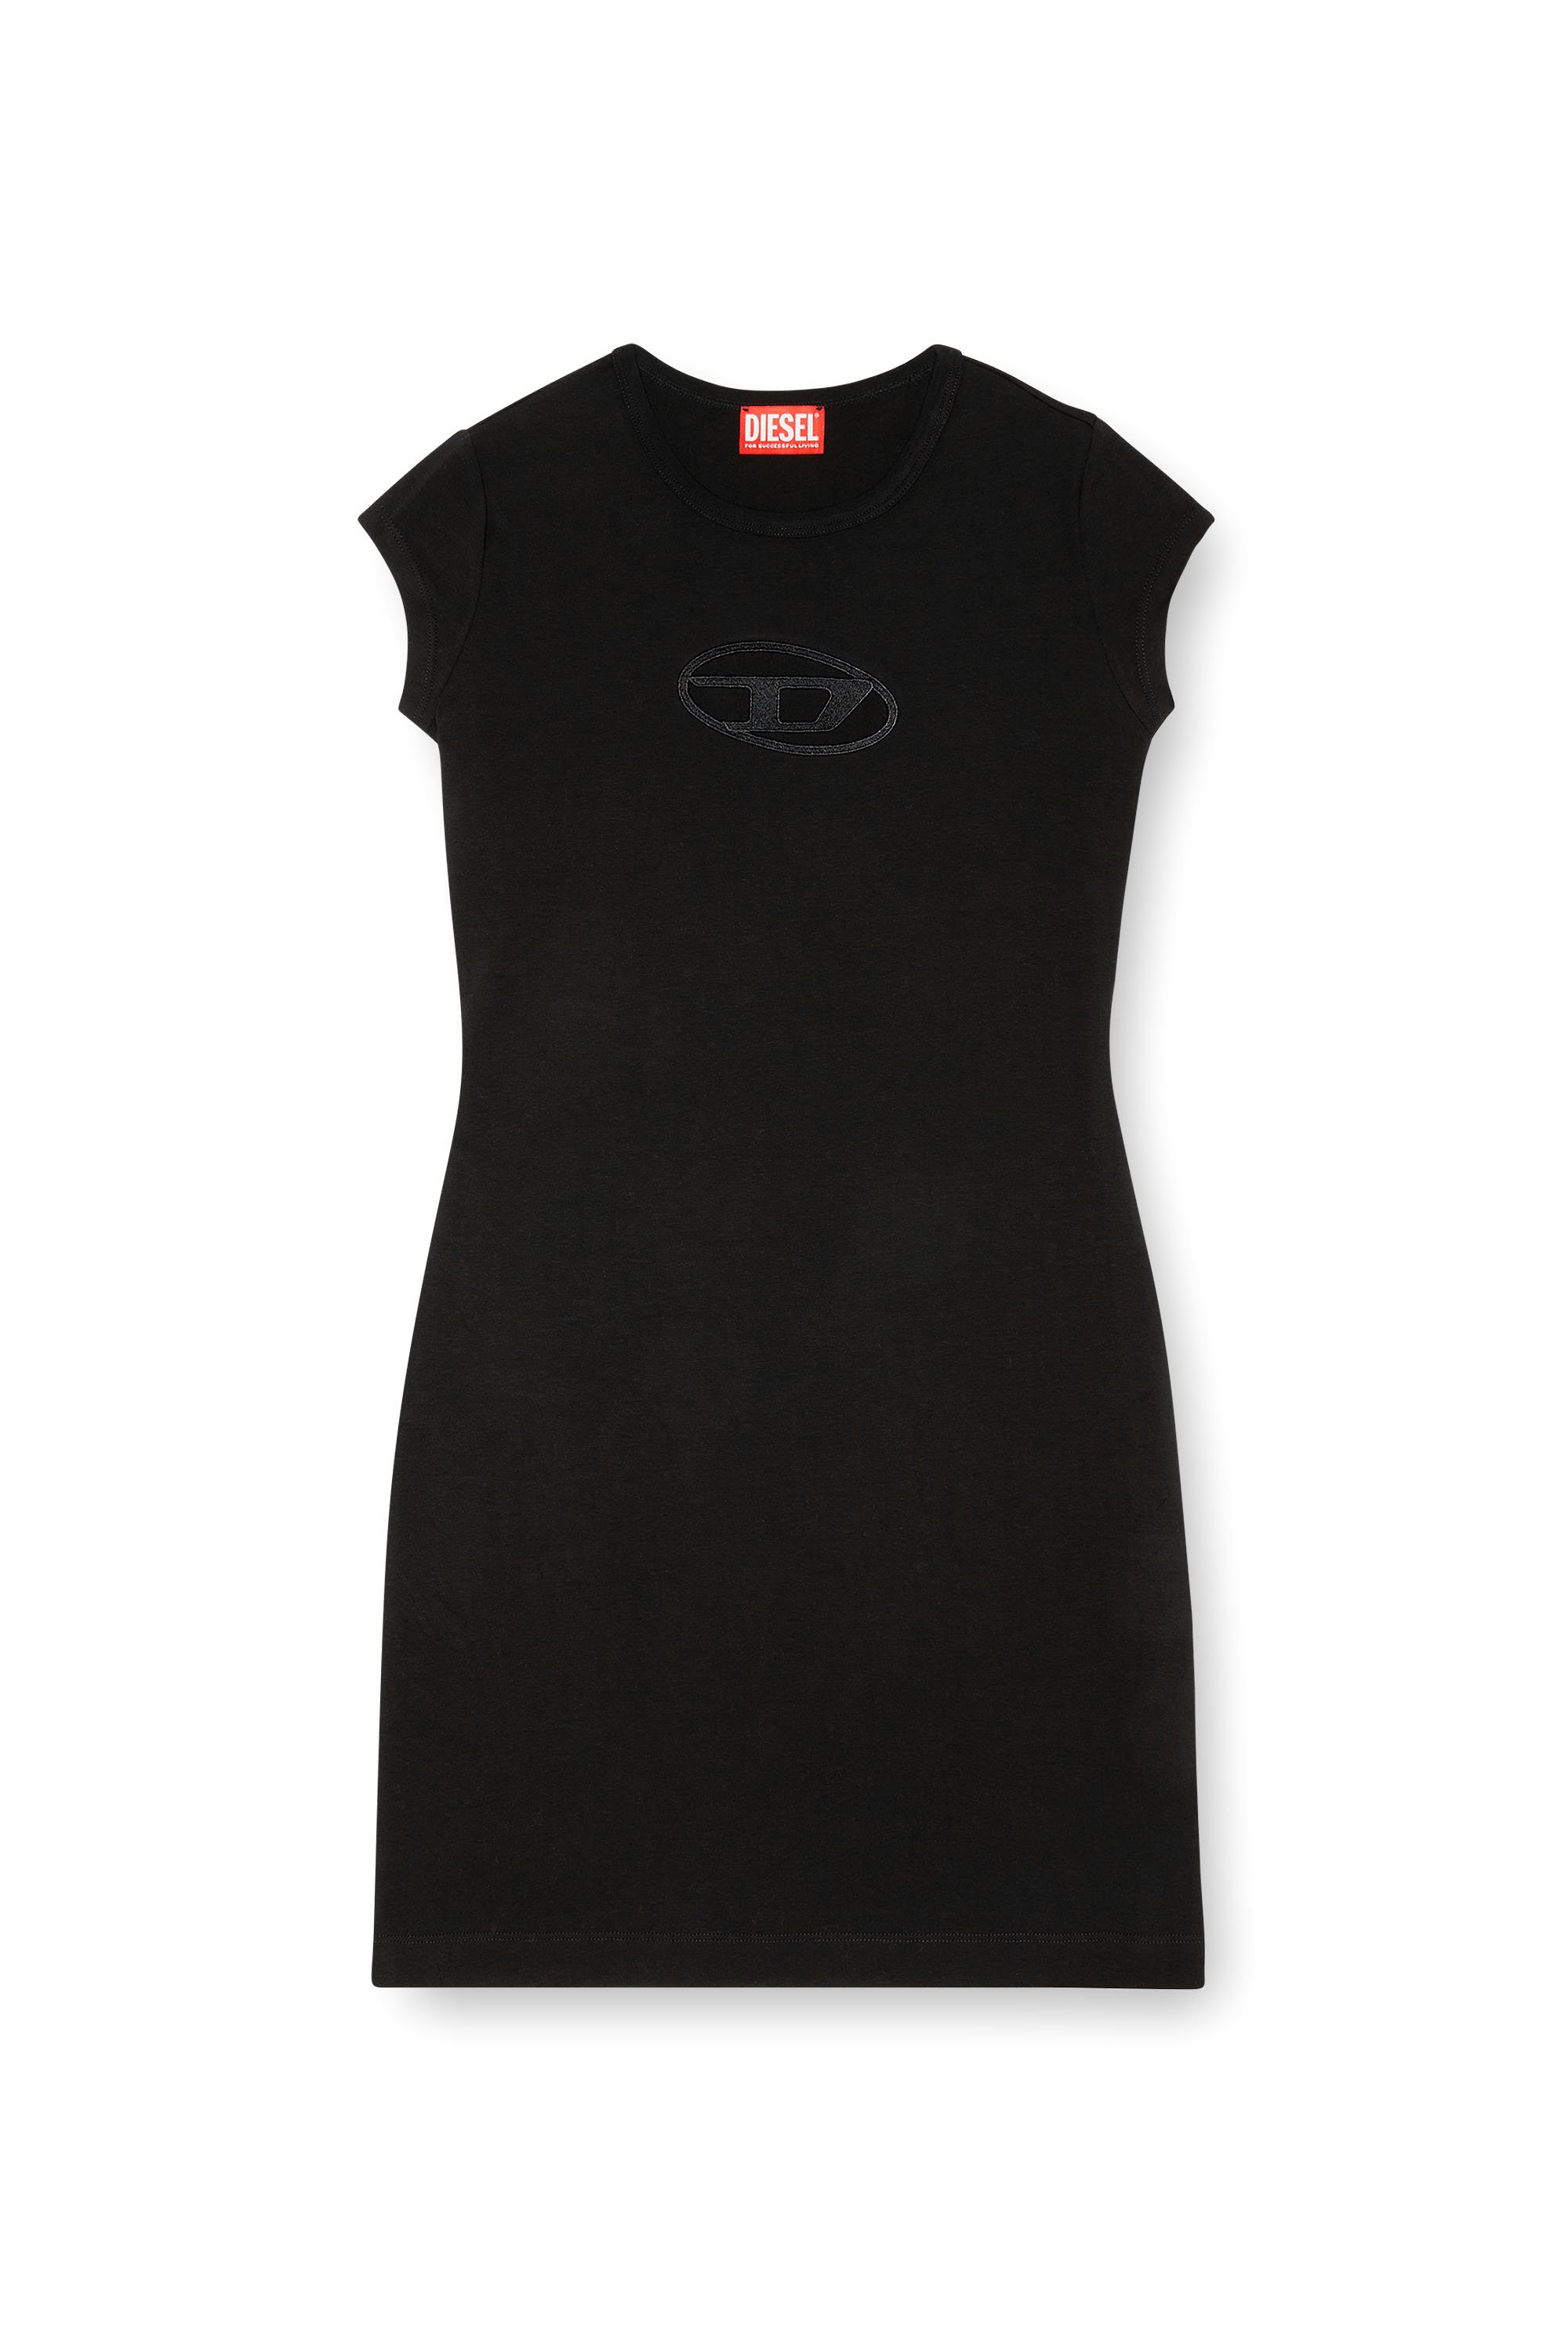 Diesel - D-ANGIEL, Female Short dress in Black - Image 4